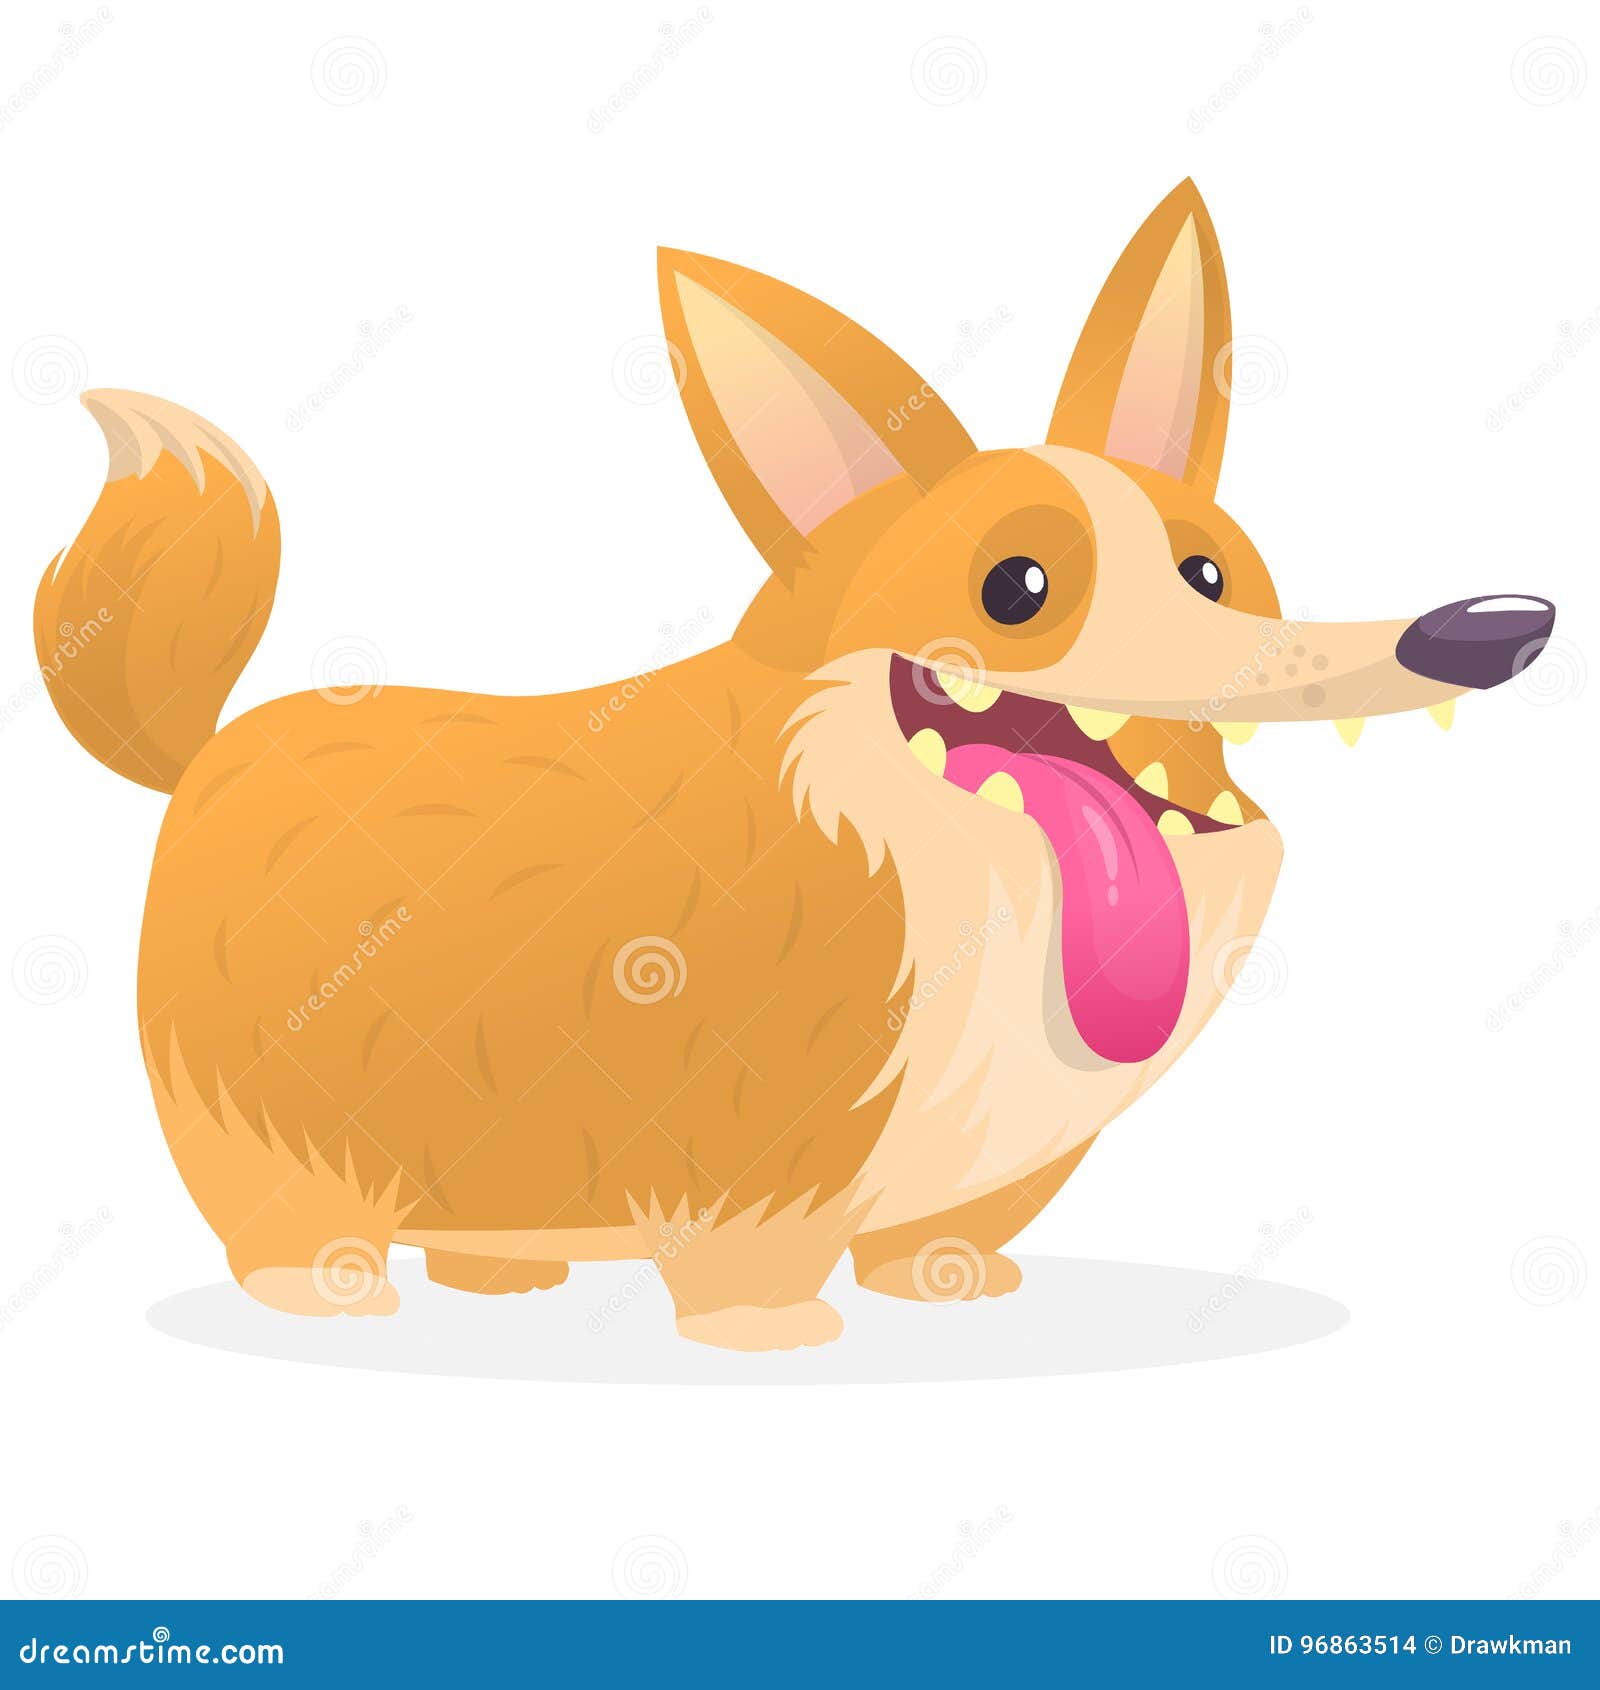 Pembroke Welsh Corgi Dog Cartoon. Vector Illustration Of A Cute Doggy ...